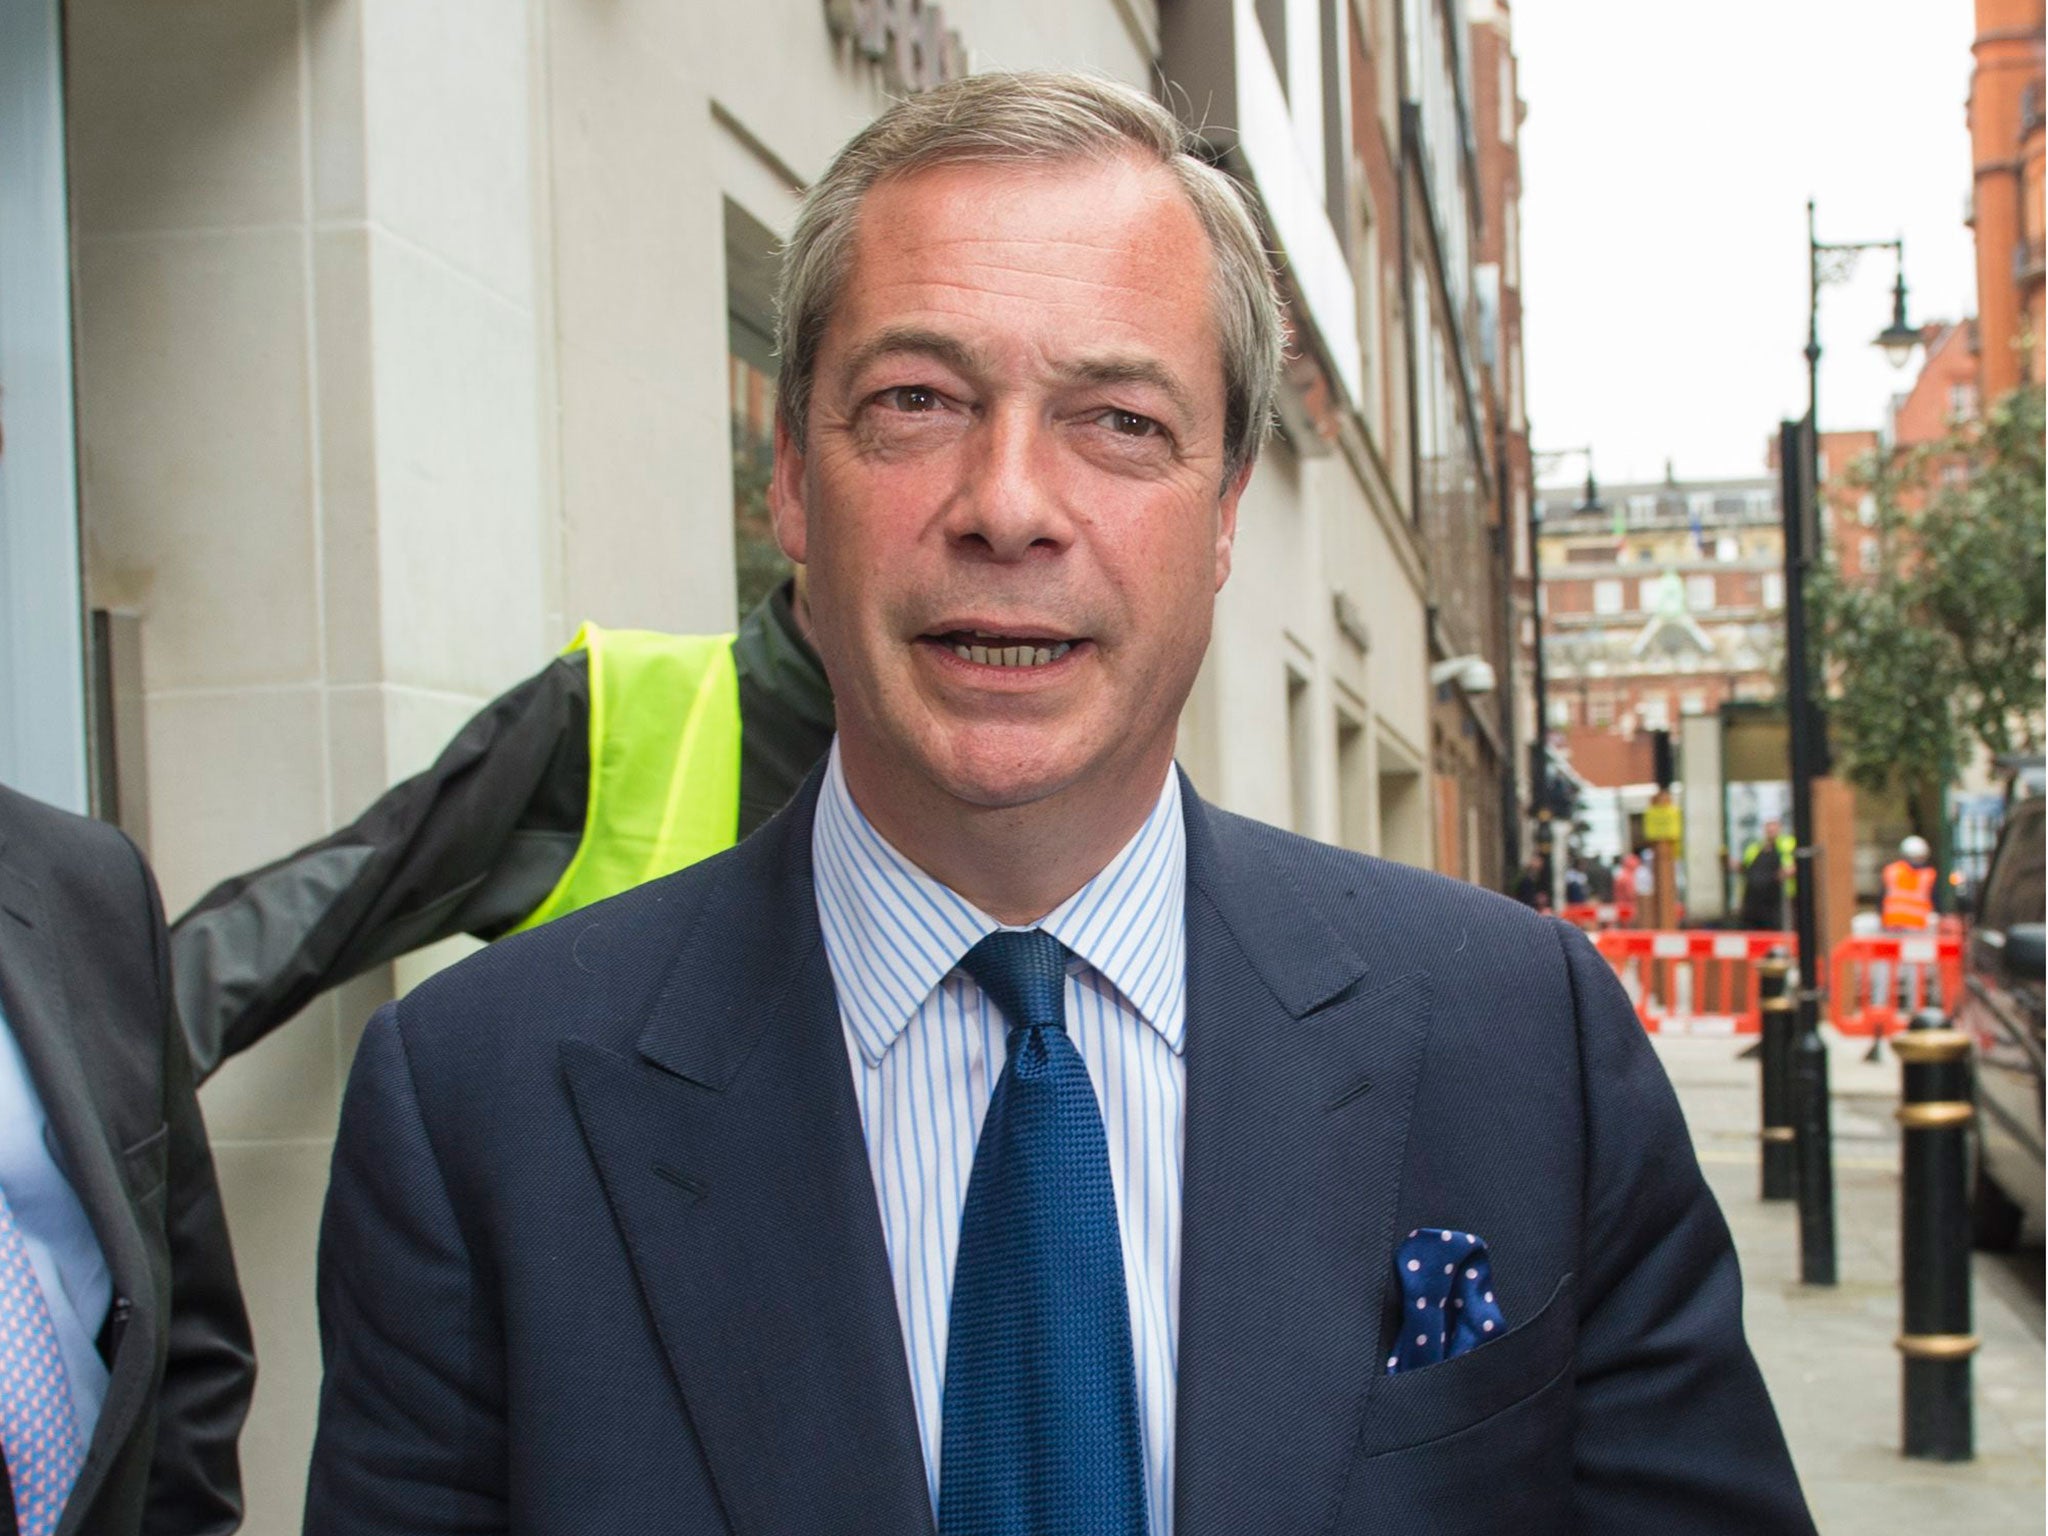 Nigel Farage has a trust rating of -18